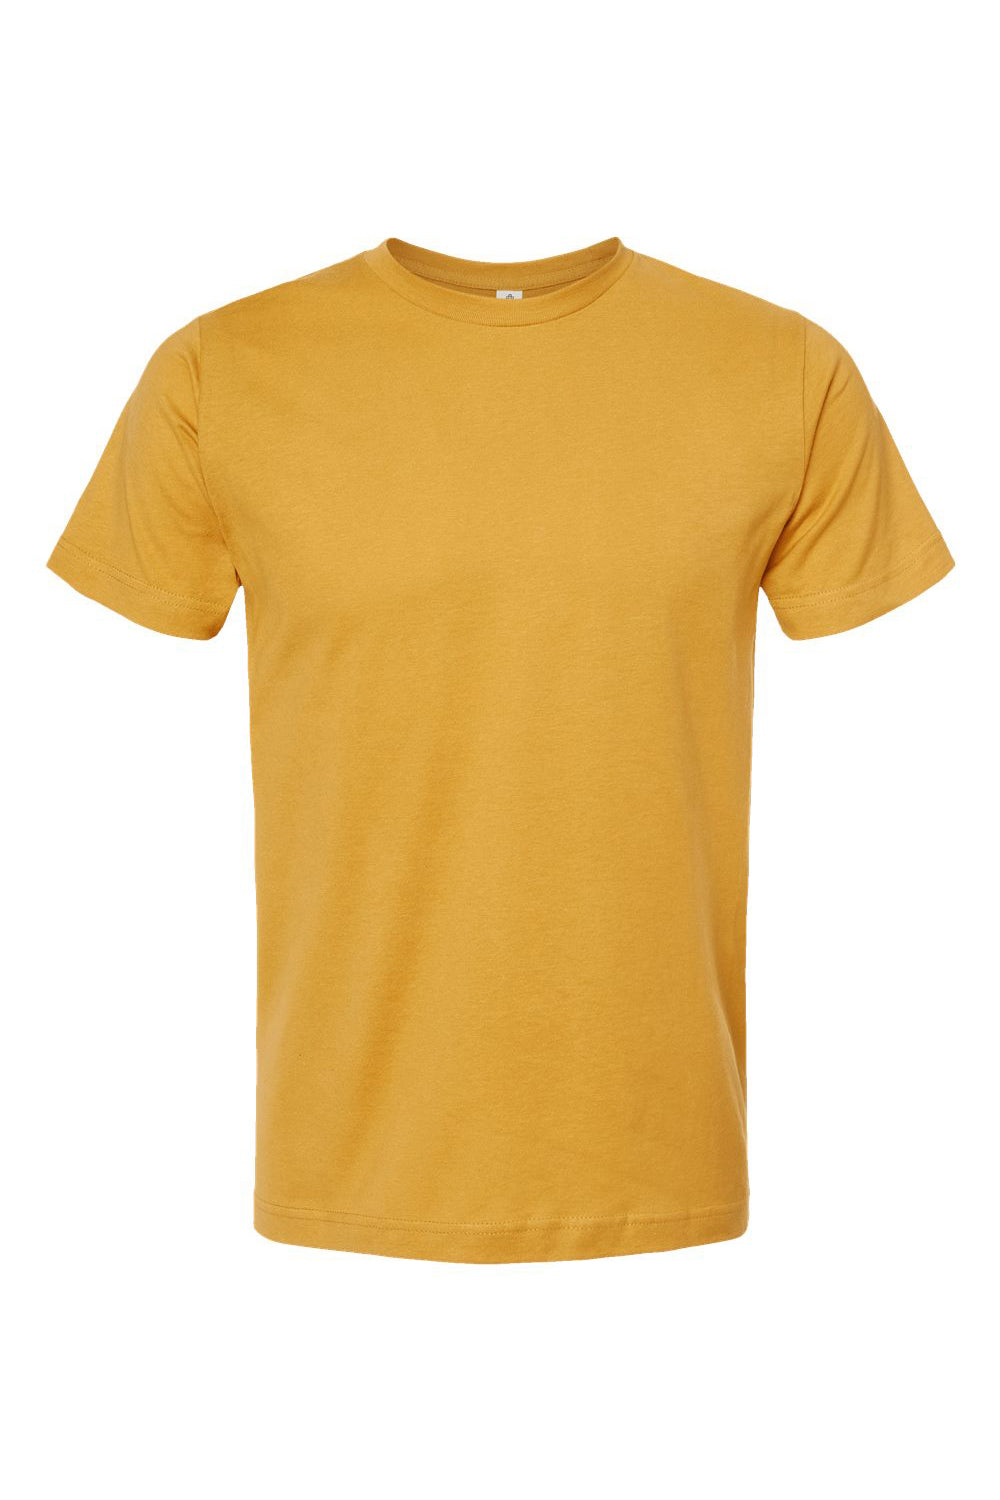 Tultex 202 Mens Fine Jersey Short Sleeve Crewneck T-Shirt Ginger Gold Flat Front